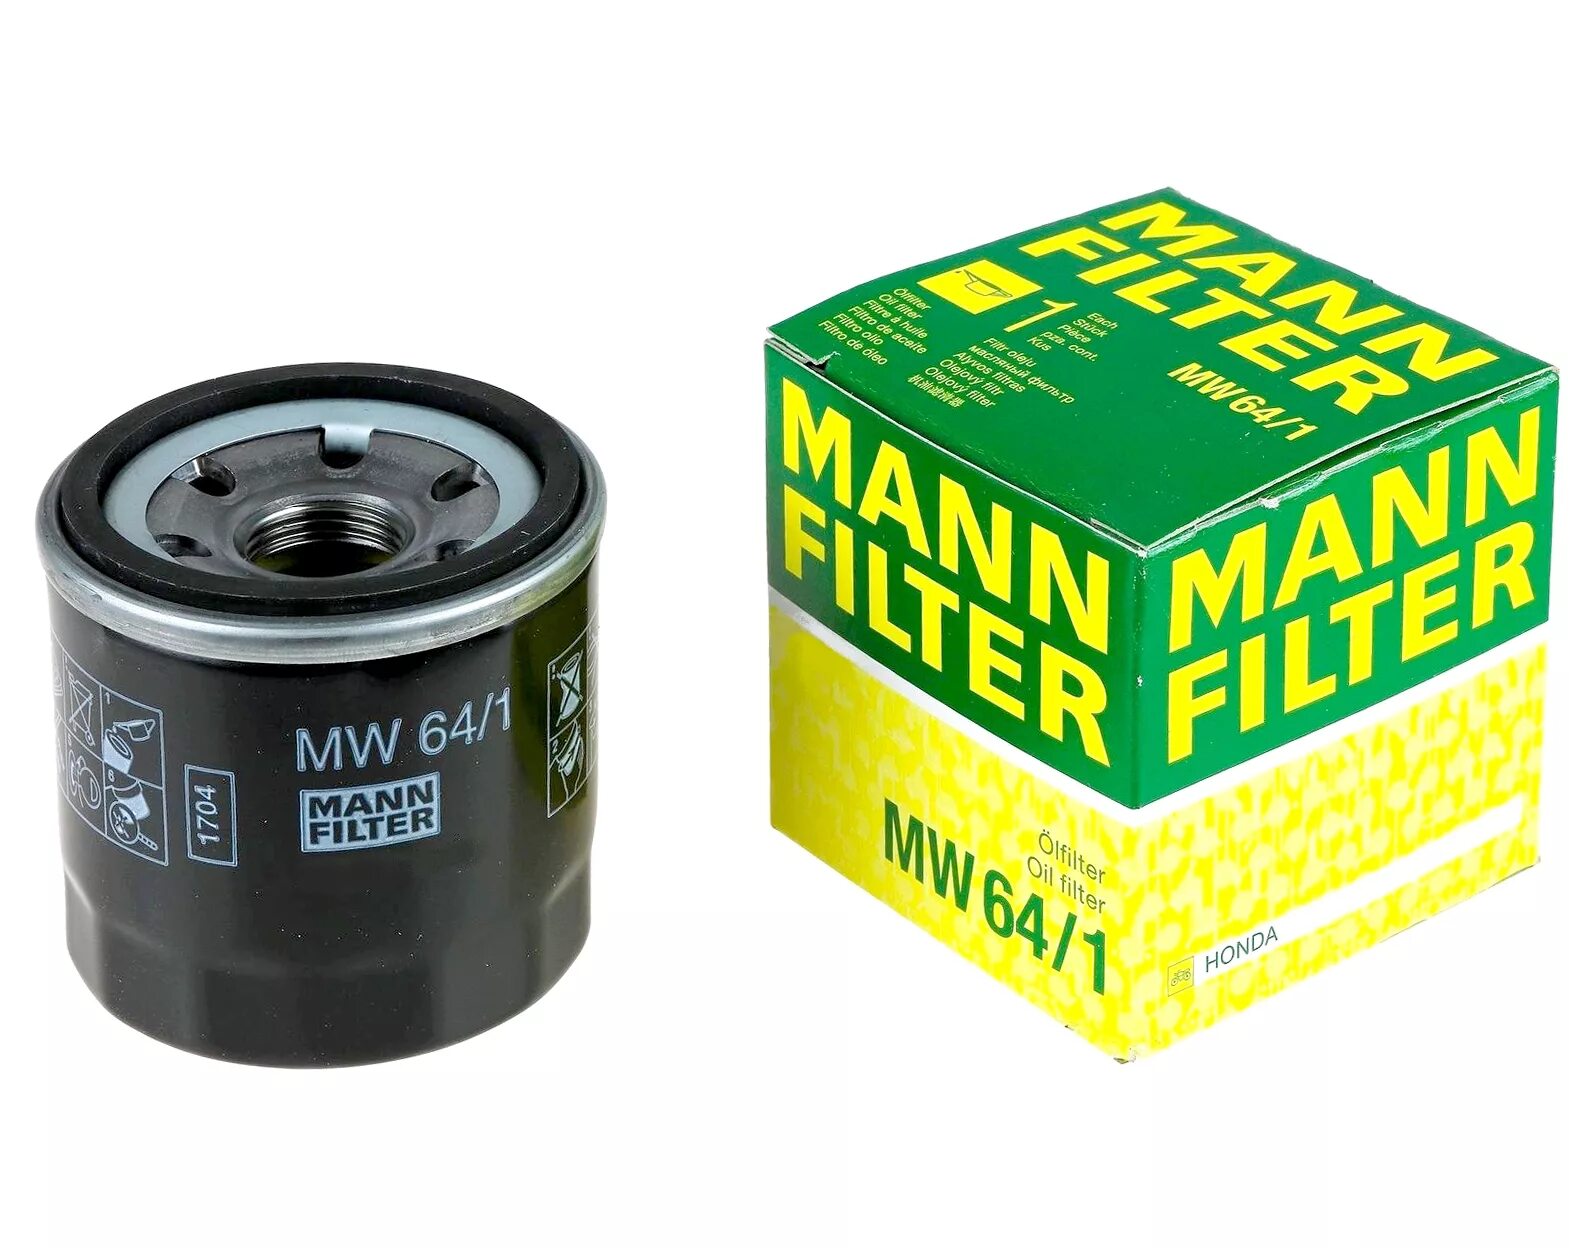 Фильтр масляный Mann mw64. Масляный фильтр Mannol mw64. Mann-Filter MW 64/1 фильтр масляный для мотоциклов. Фильтр Манн 64/1 на Хонда.